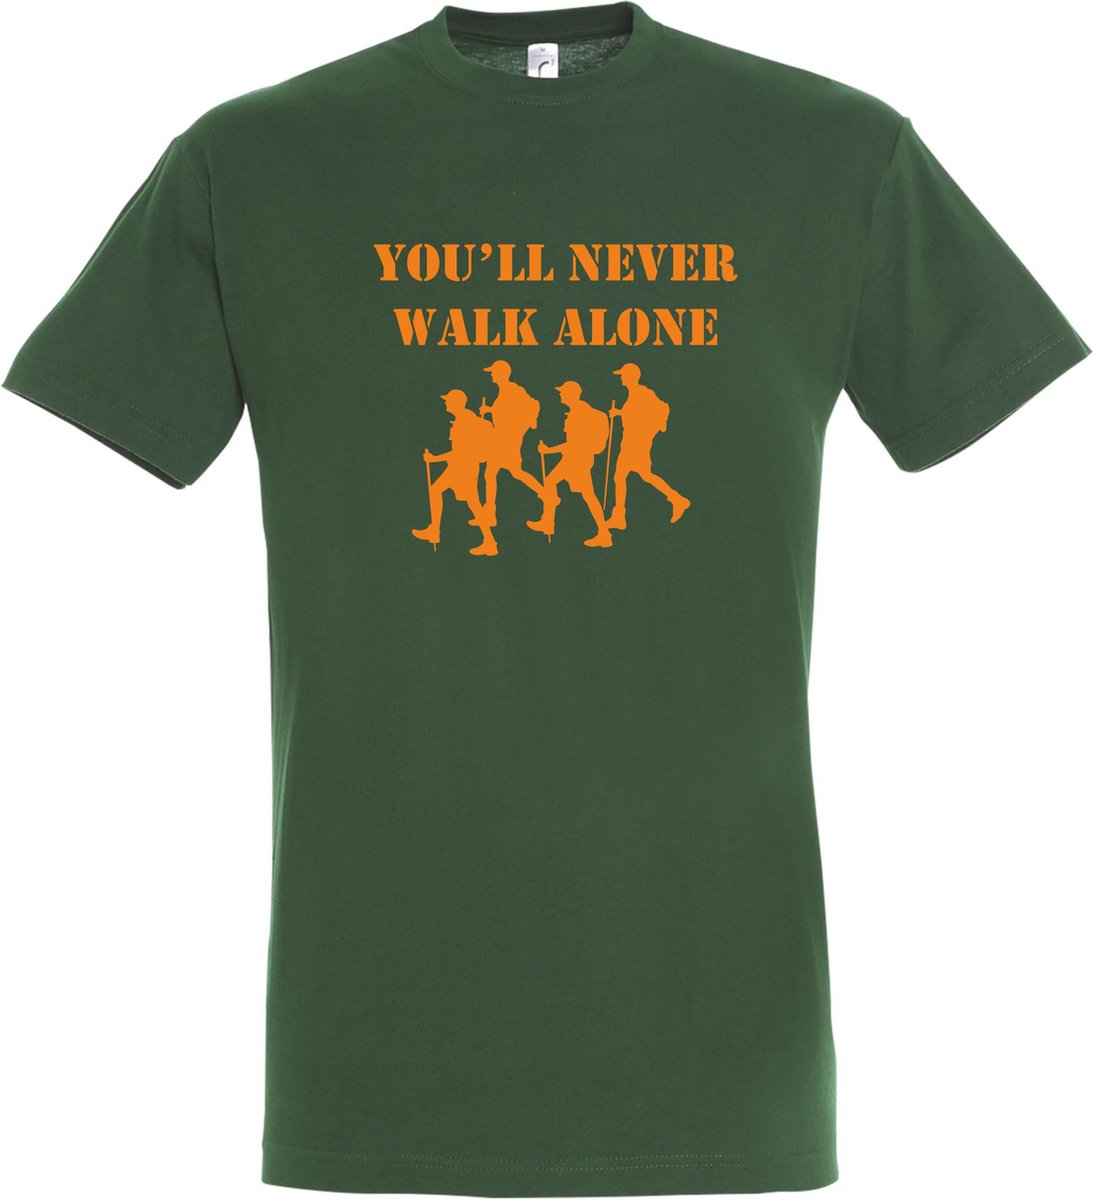 T-shirt Youll never walk alone |Wandelvierdaagse | vierdaagse Nijmegen | Roze woensdag | Groen | maat XXL